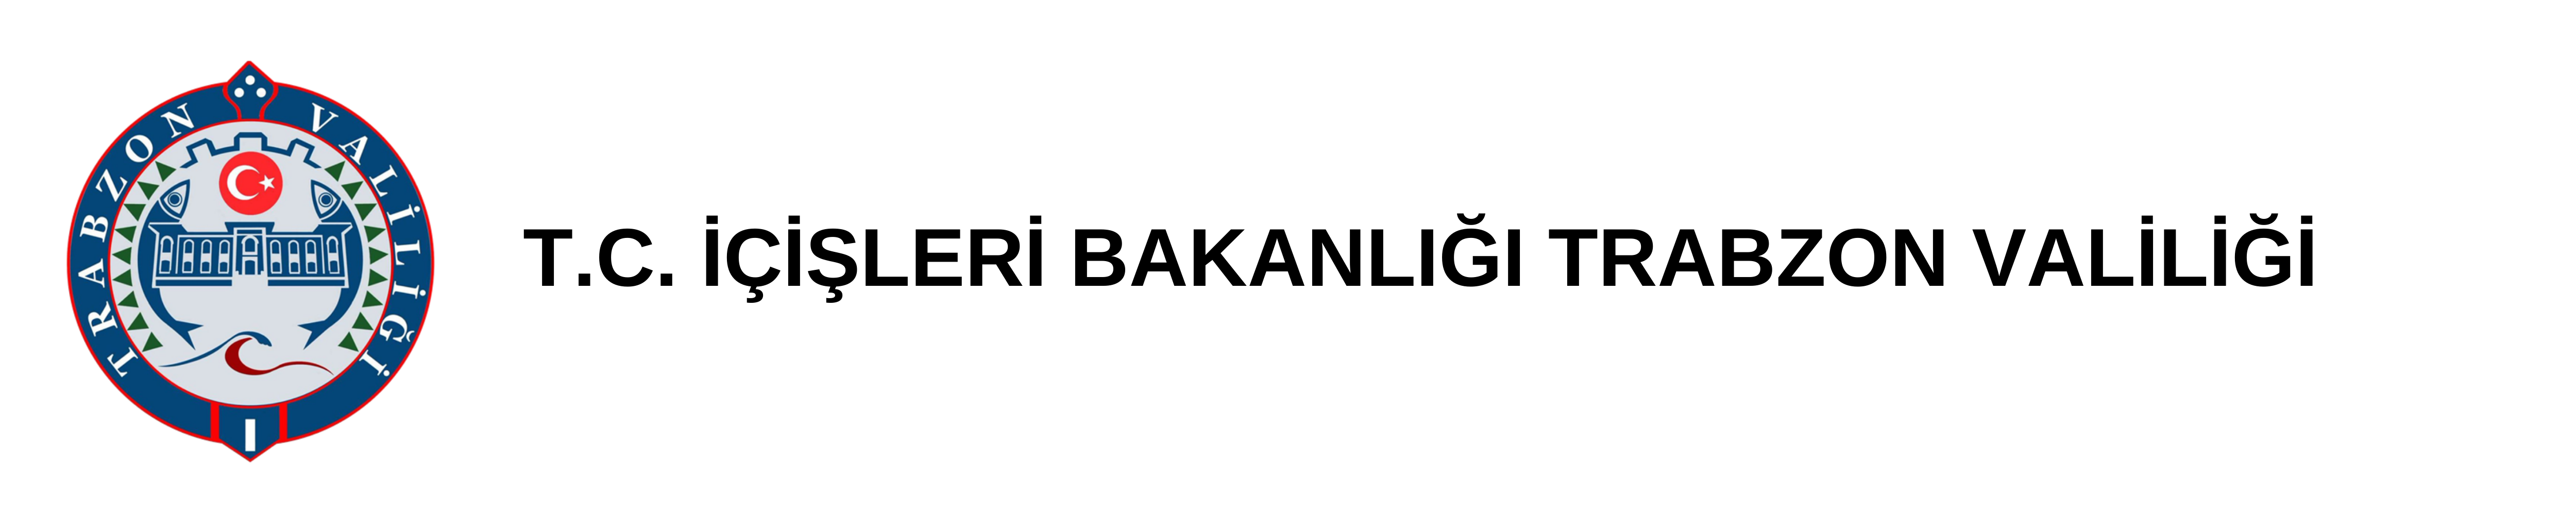 Trabzon Valiliği